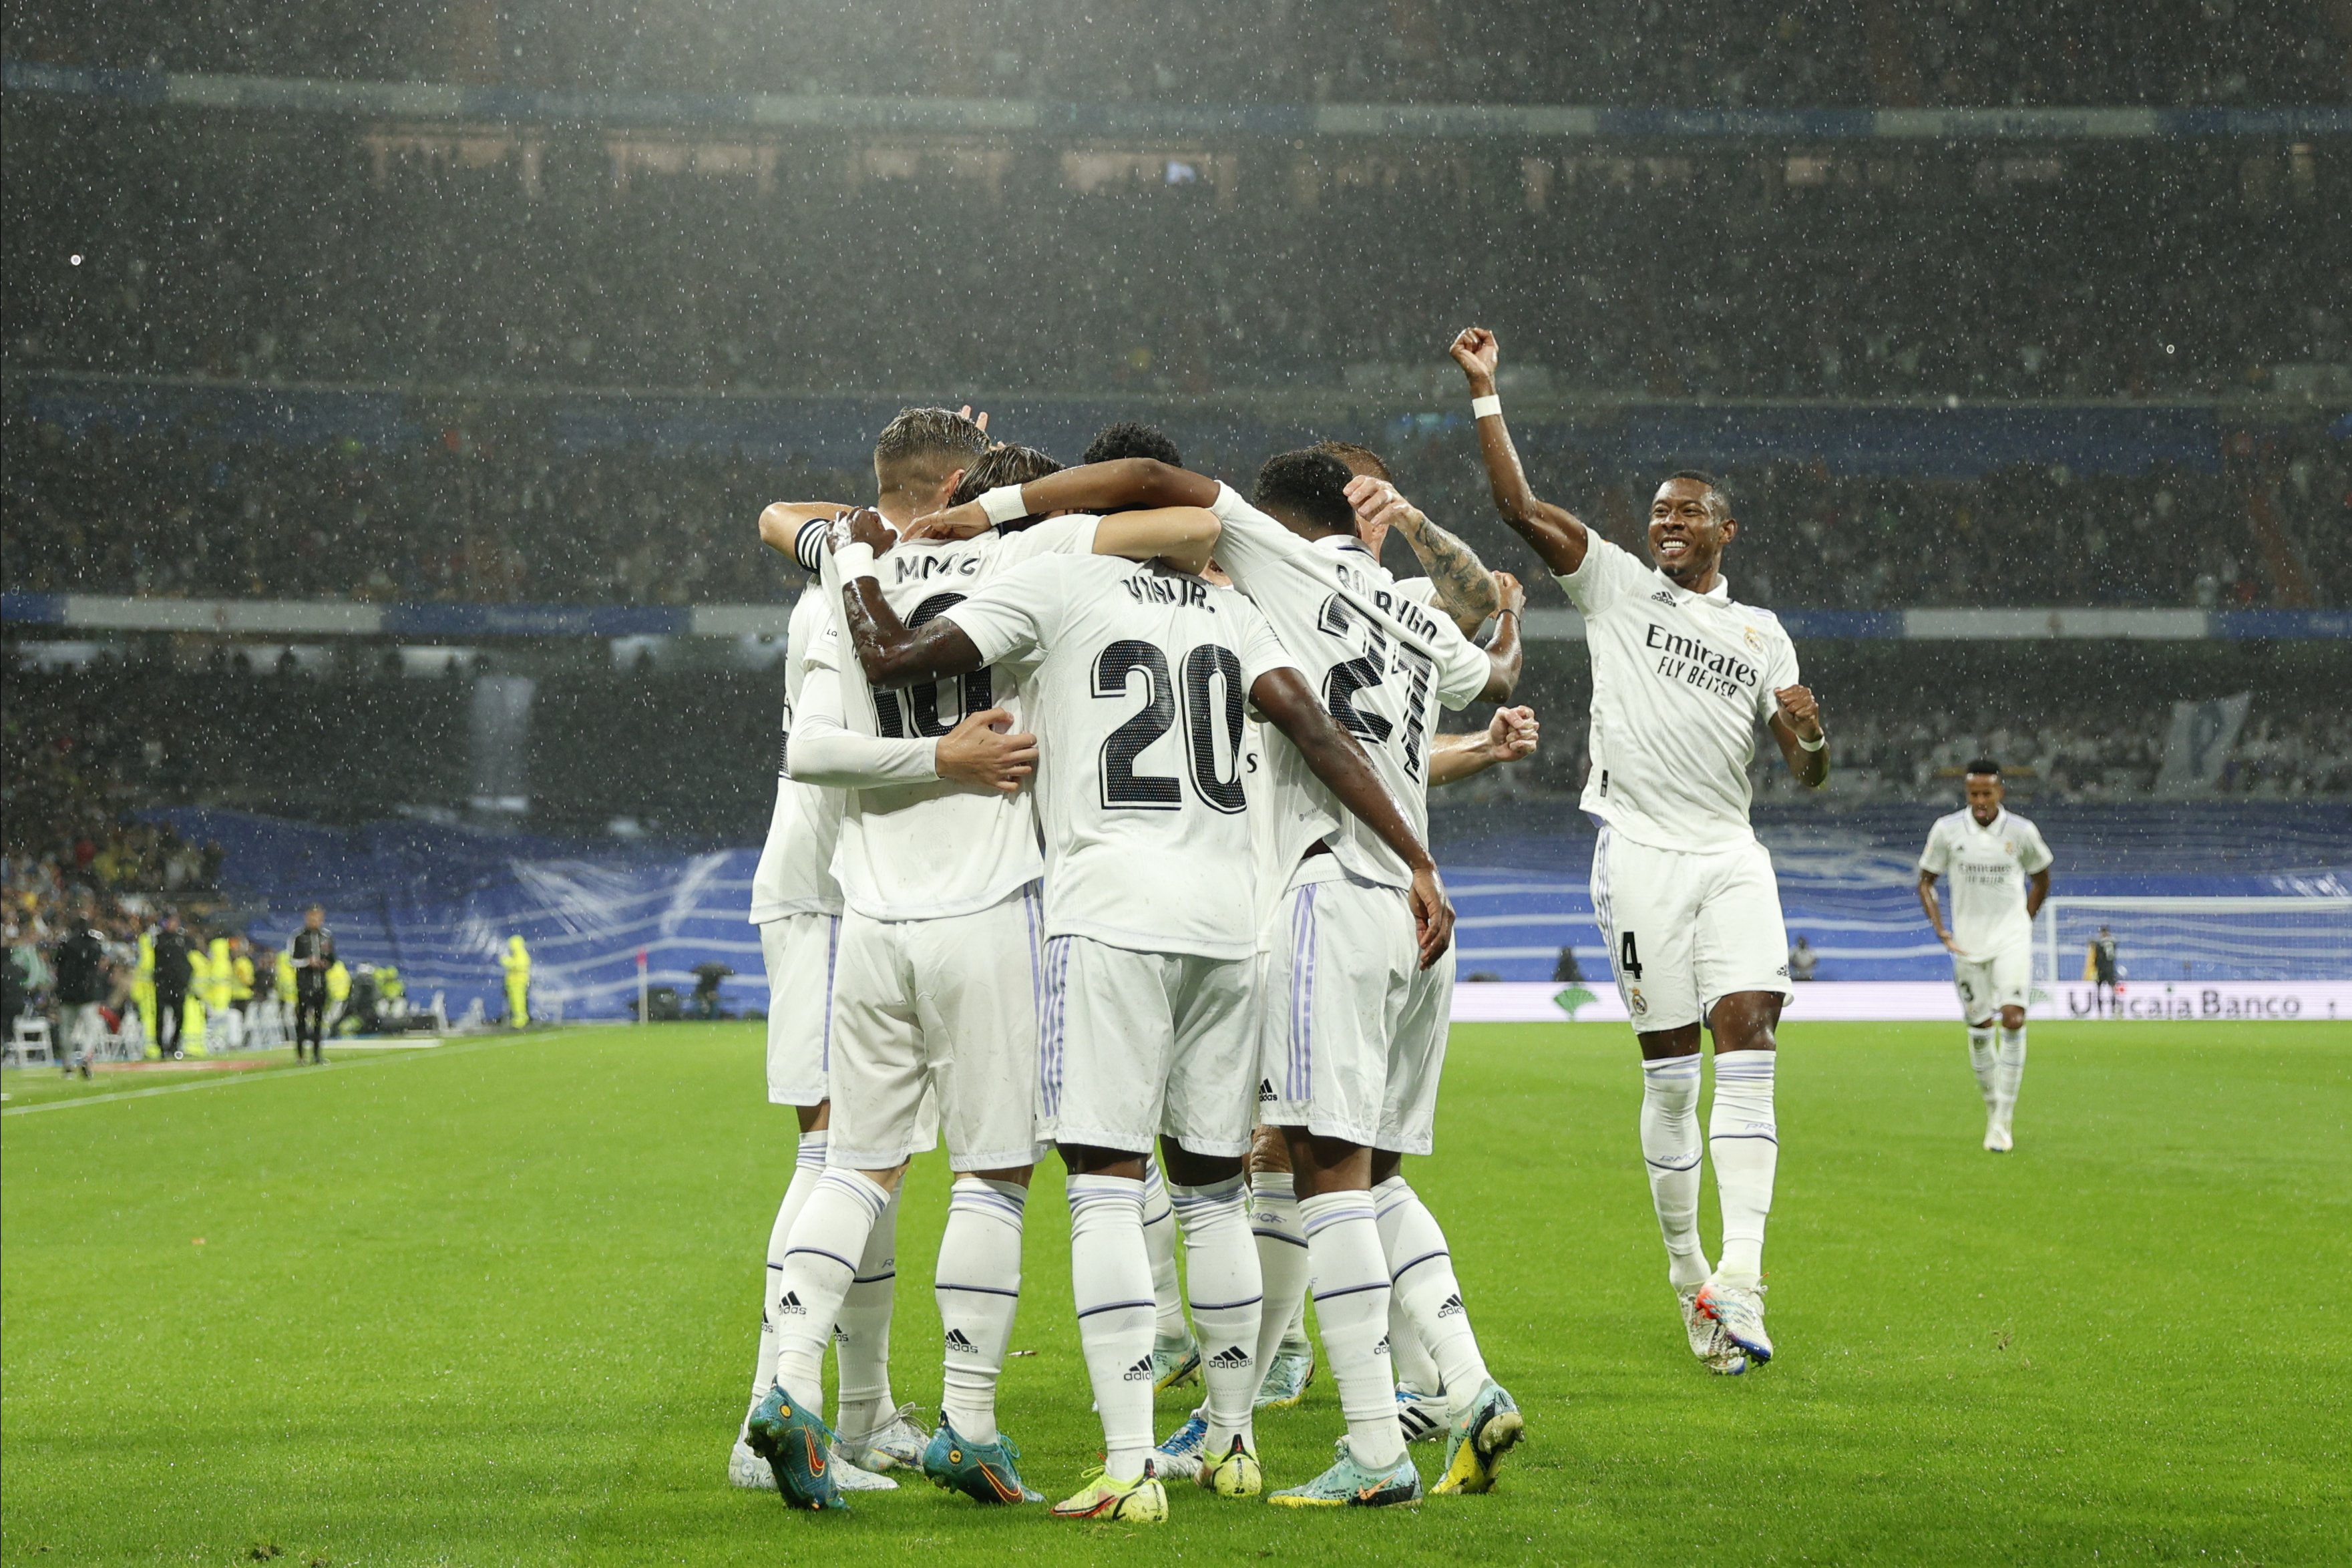 Un Real Madrid demoledor supera al Sevilla y blinda el liderato de la Liga (3-1)